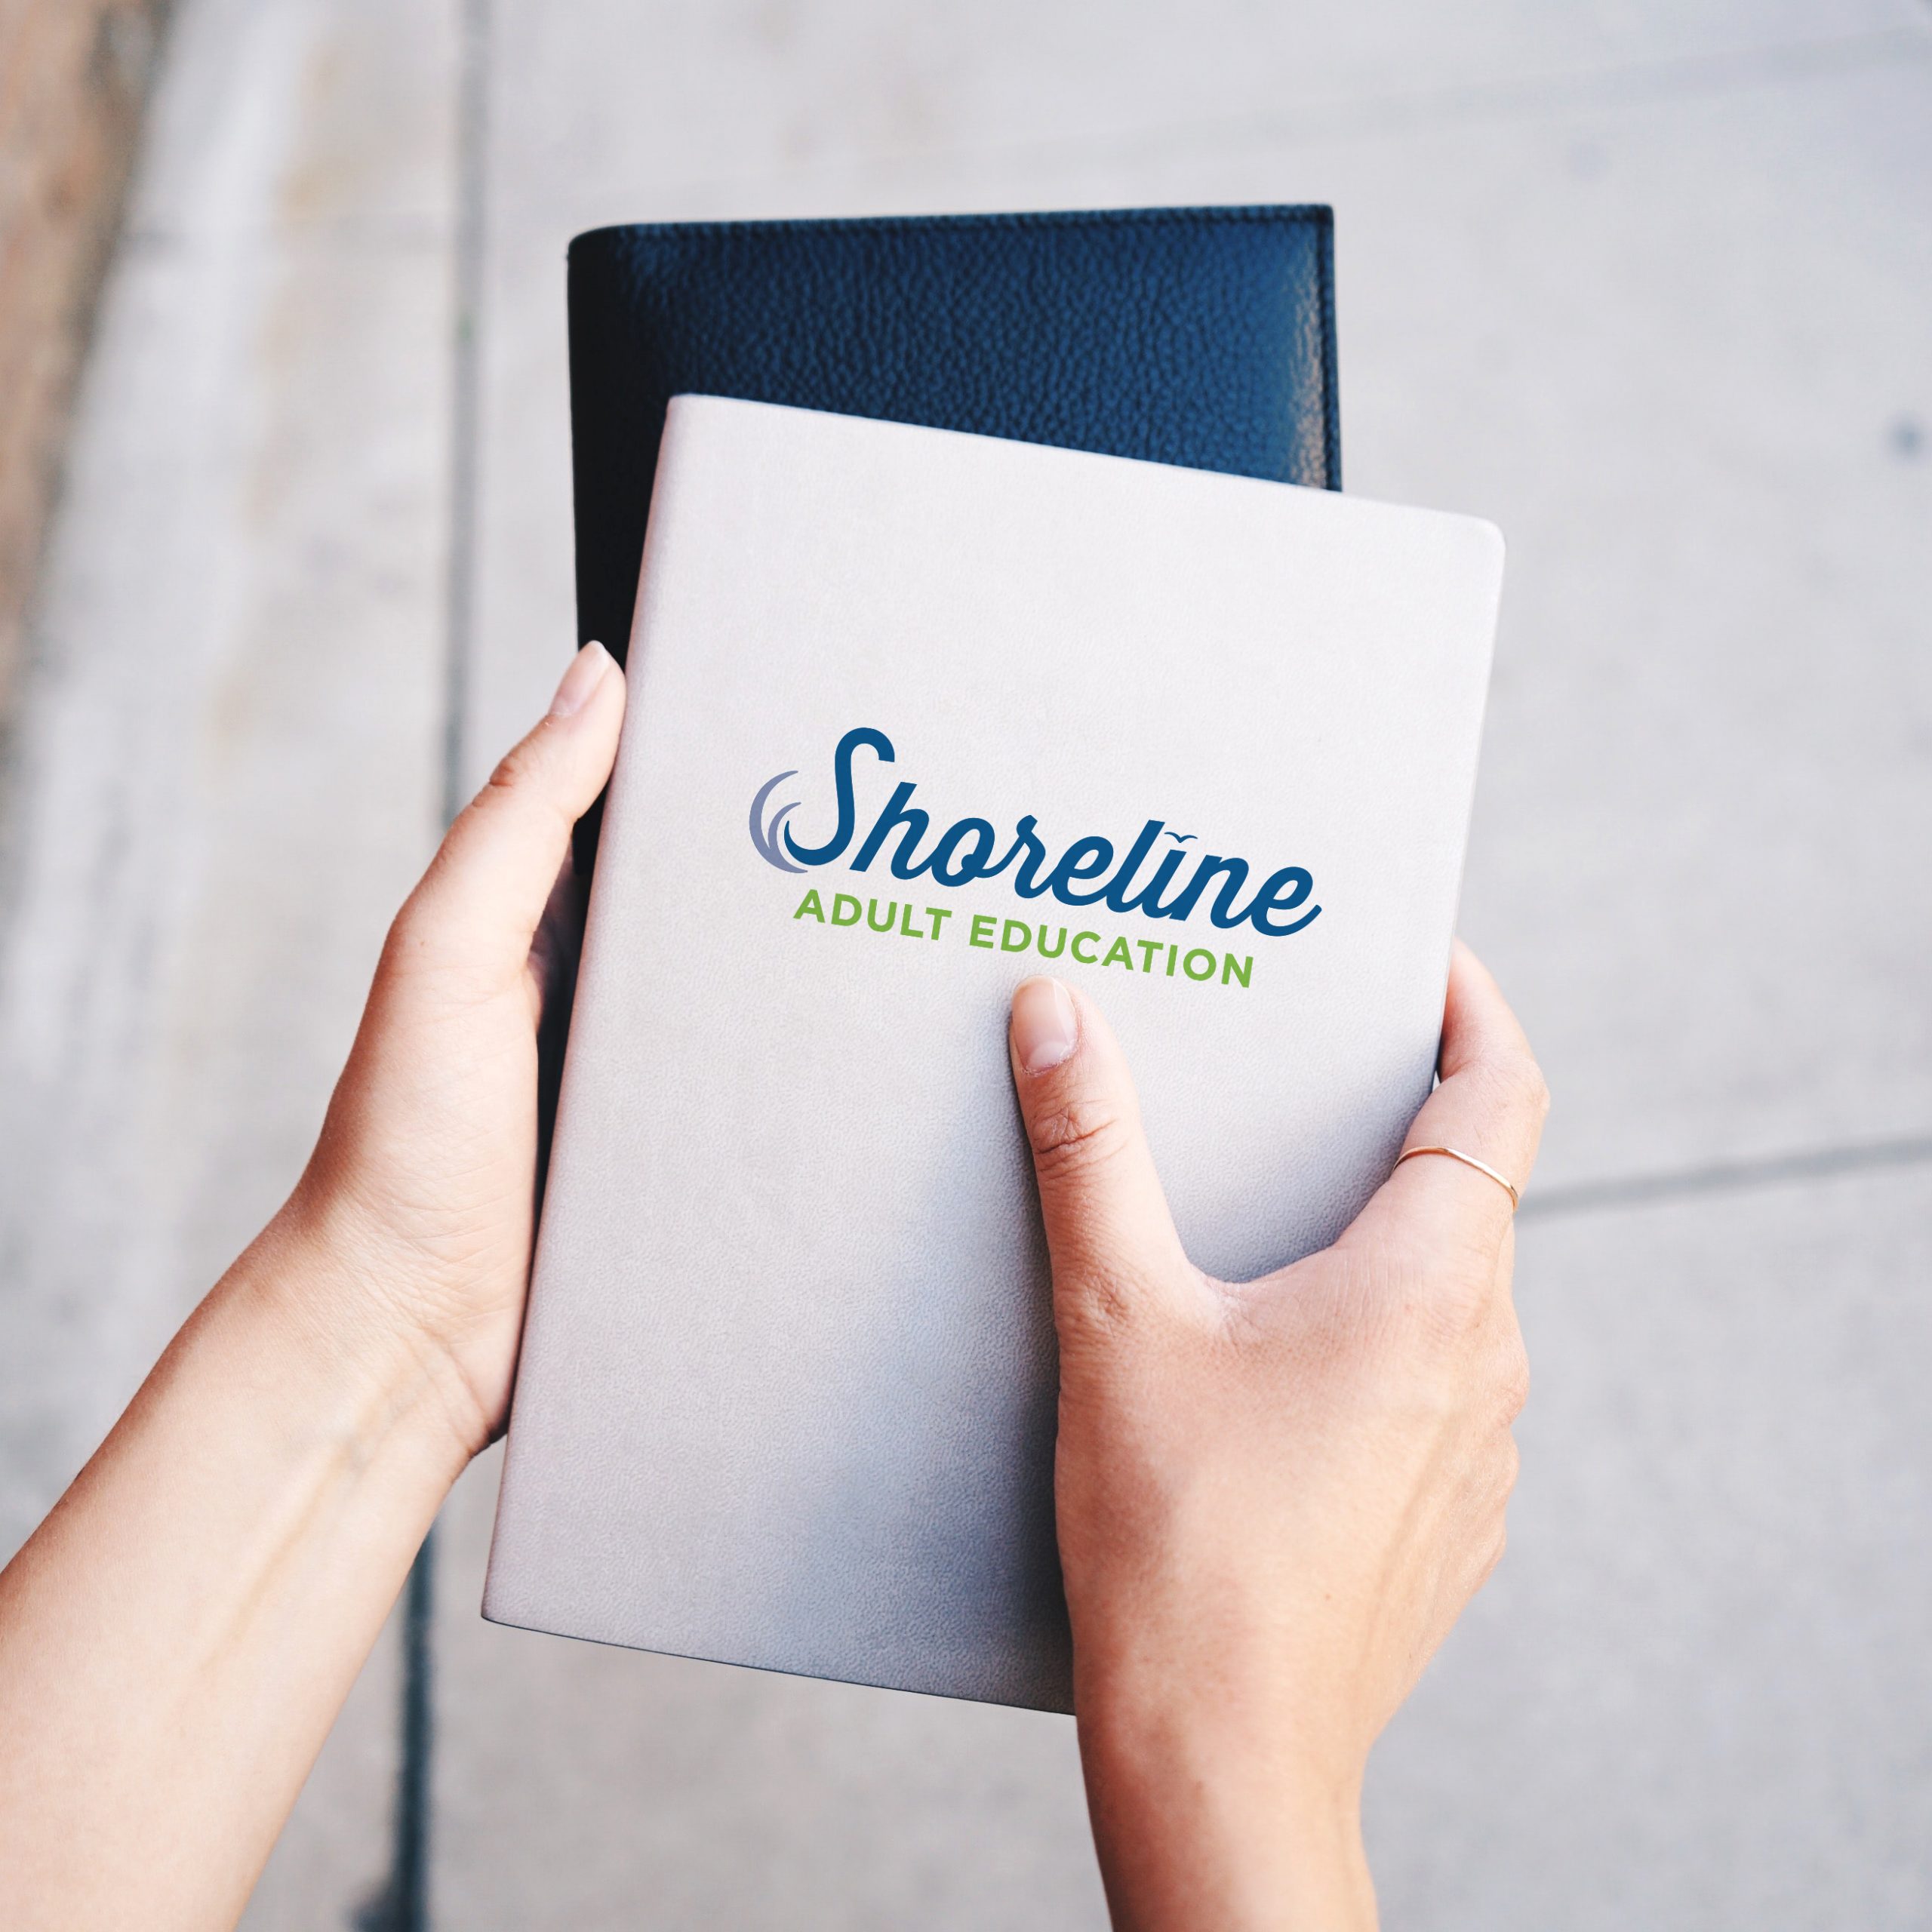 ShorelineAdultEducation-notebook